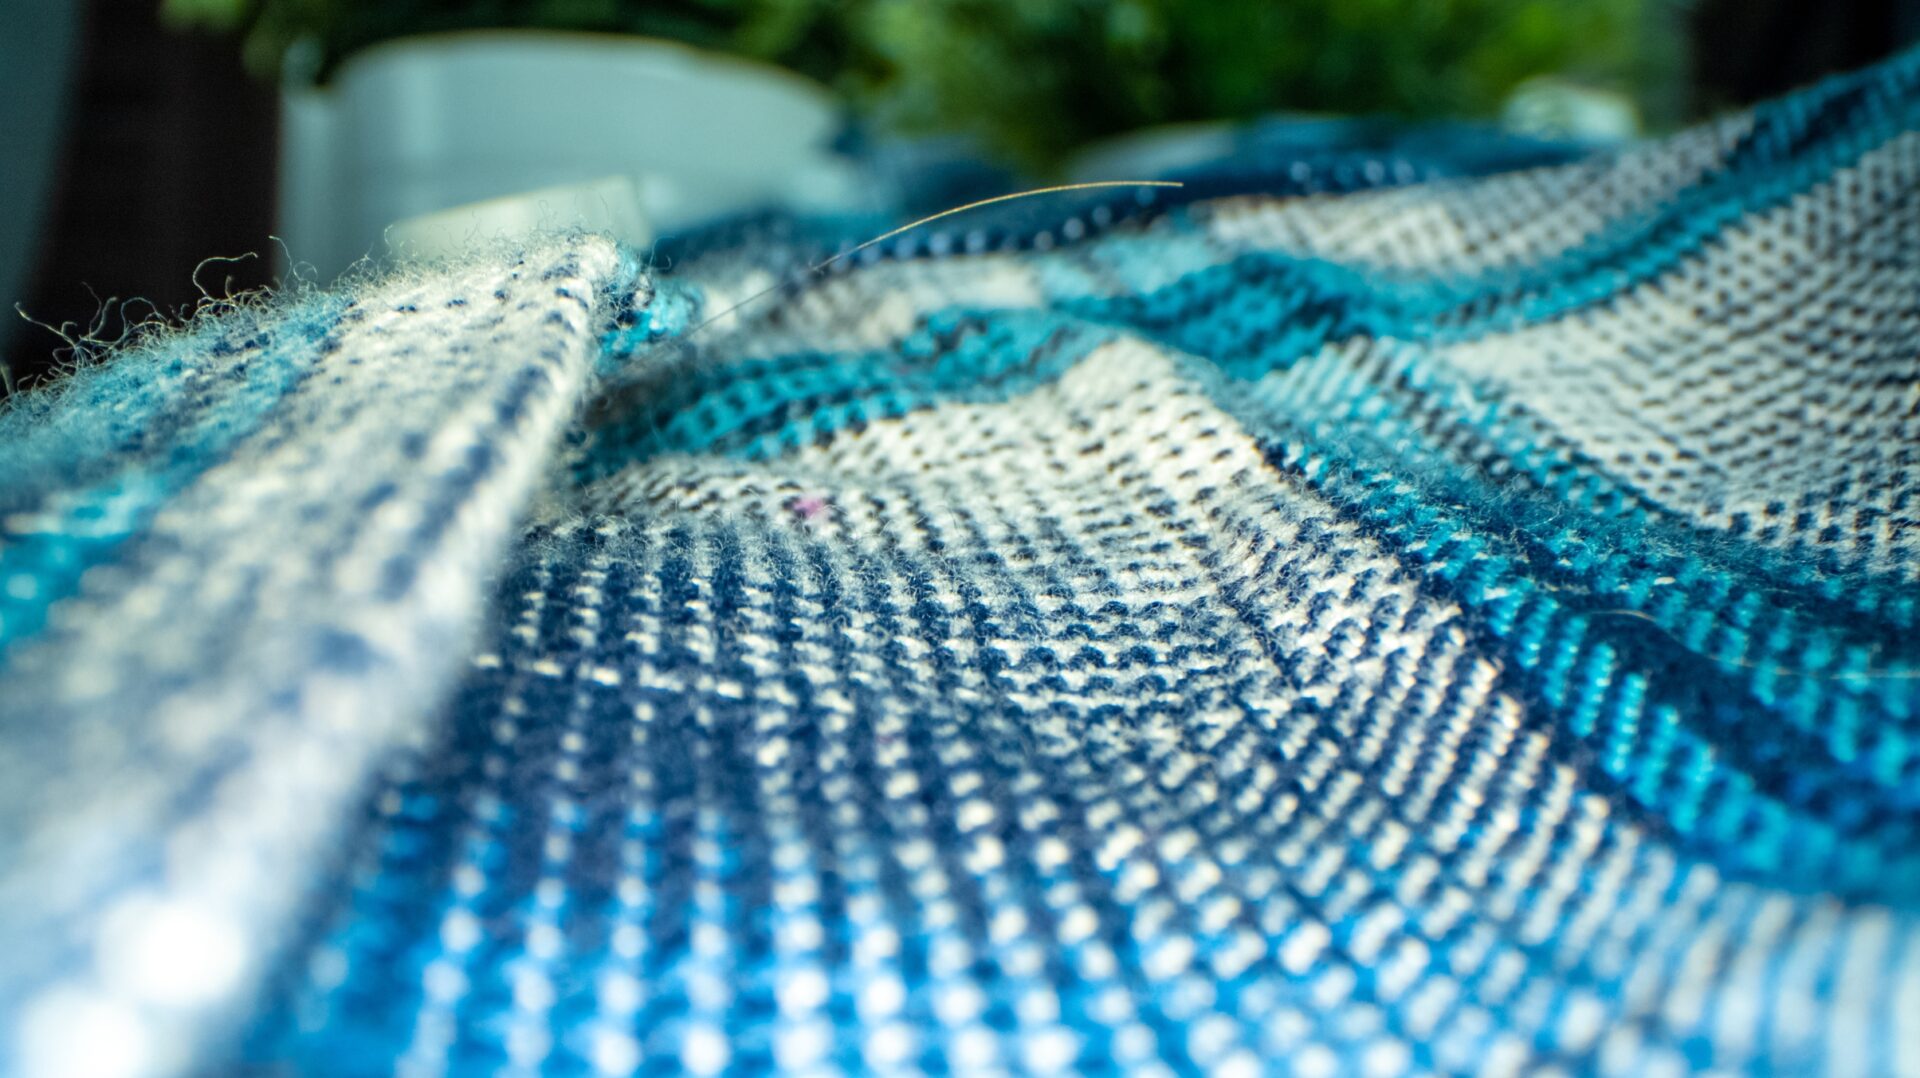 Closeup shot of a blue color fabric sample